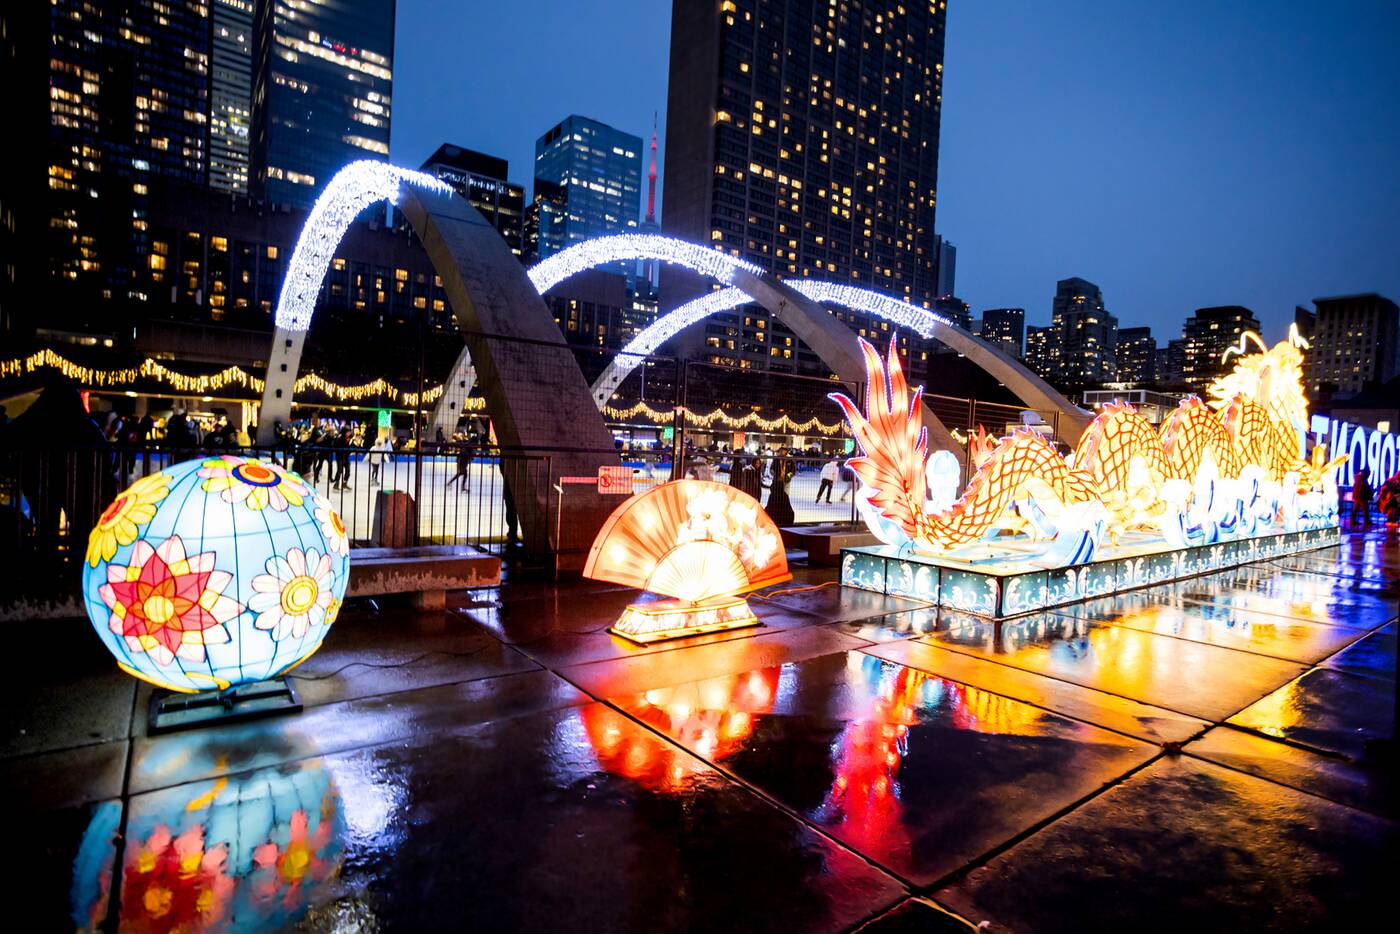 Cavalcade of Lights brings luminous displays to Toronto's main public